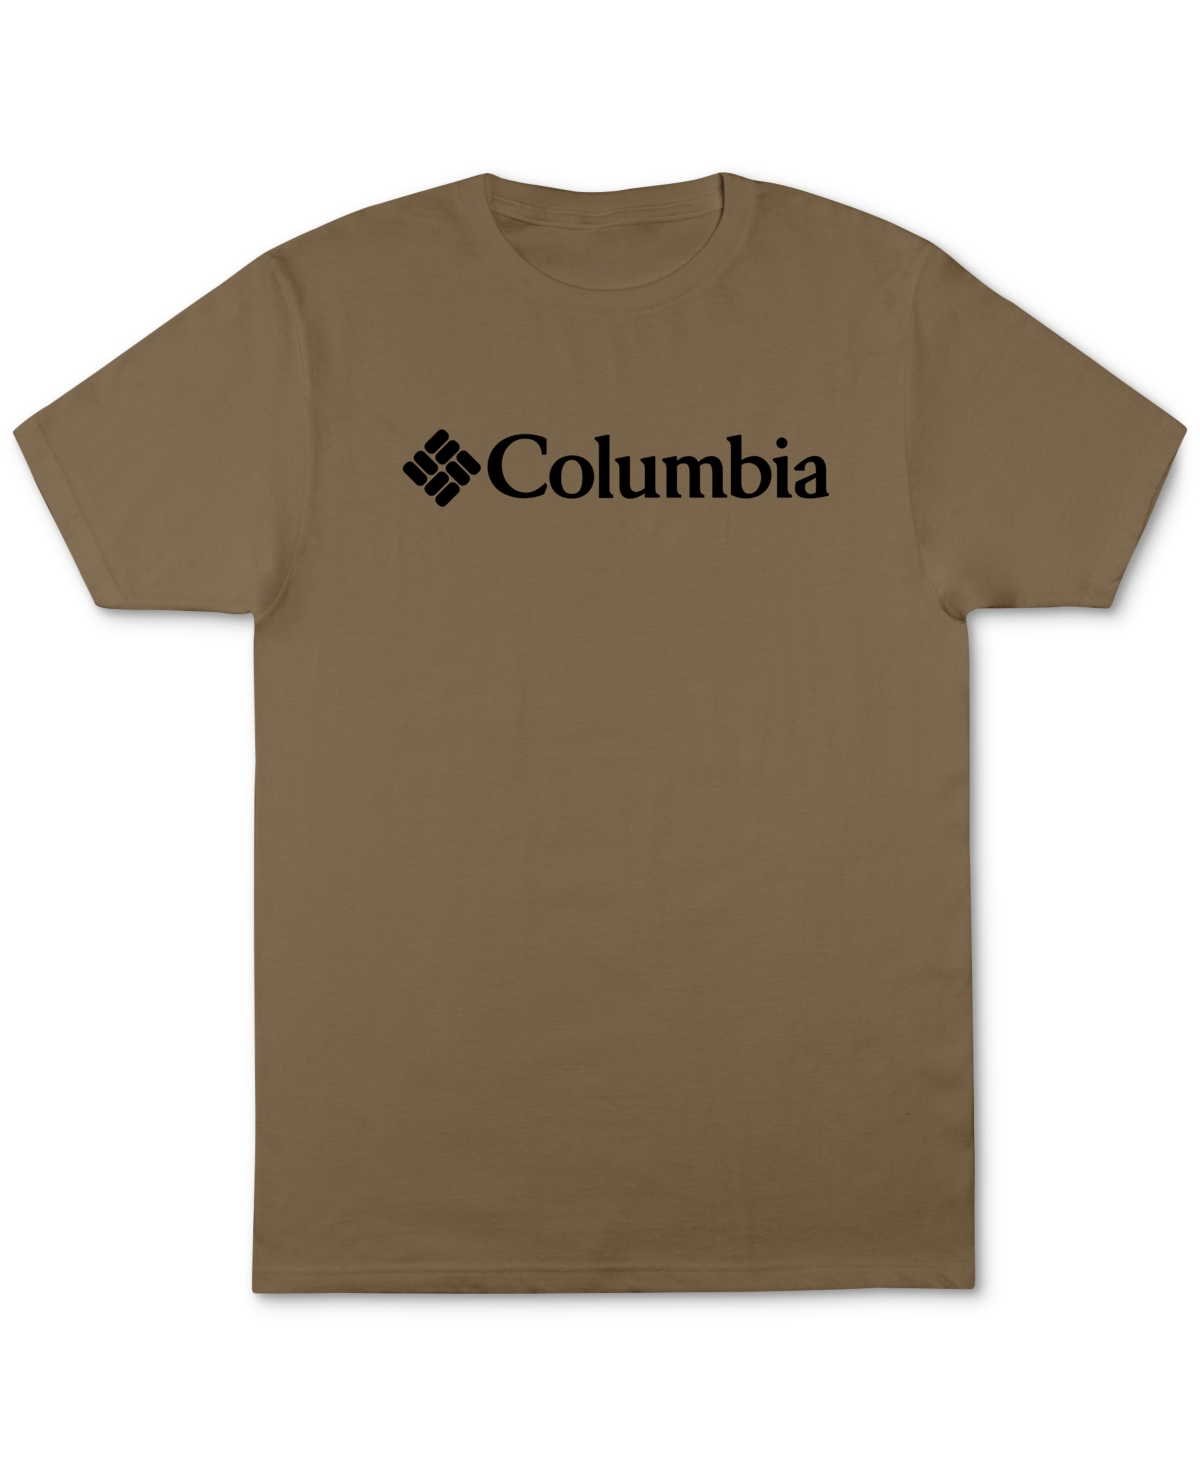 Columbia Men's Tennessee Volunteers Tennessee Orange Terminal Tackle Shirt, Medium